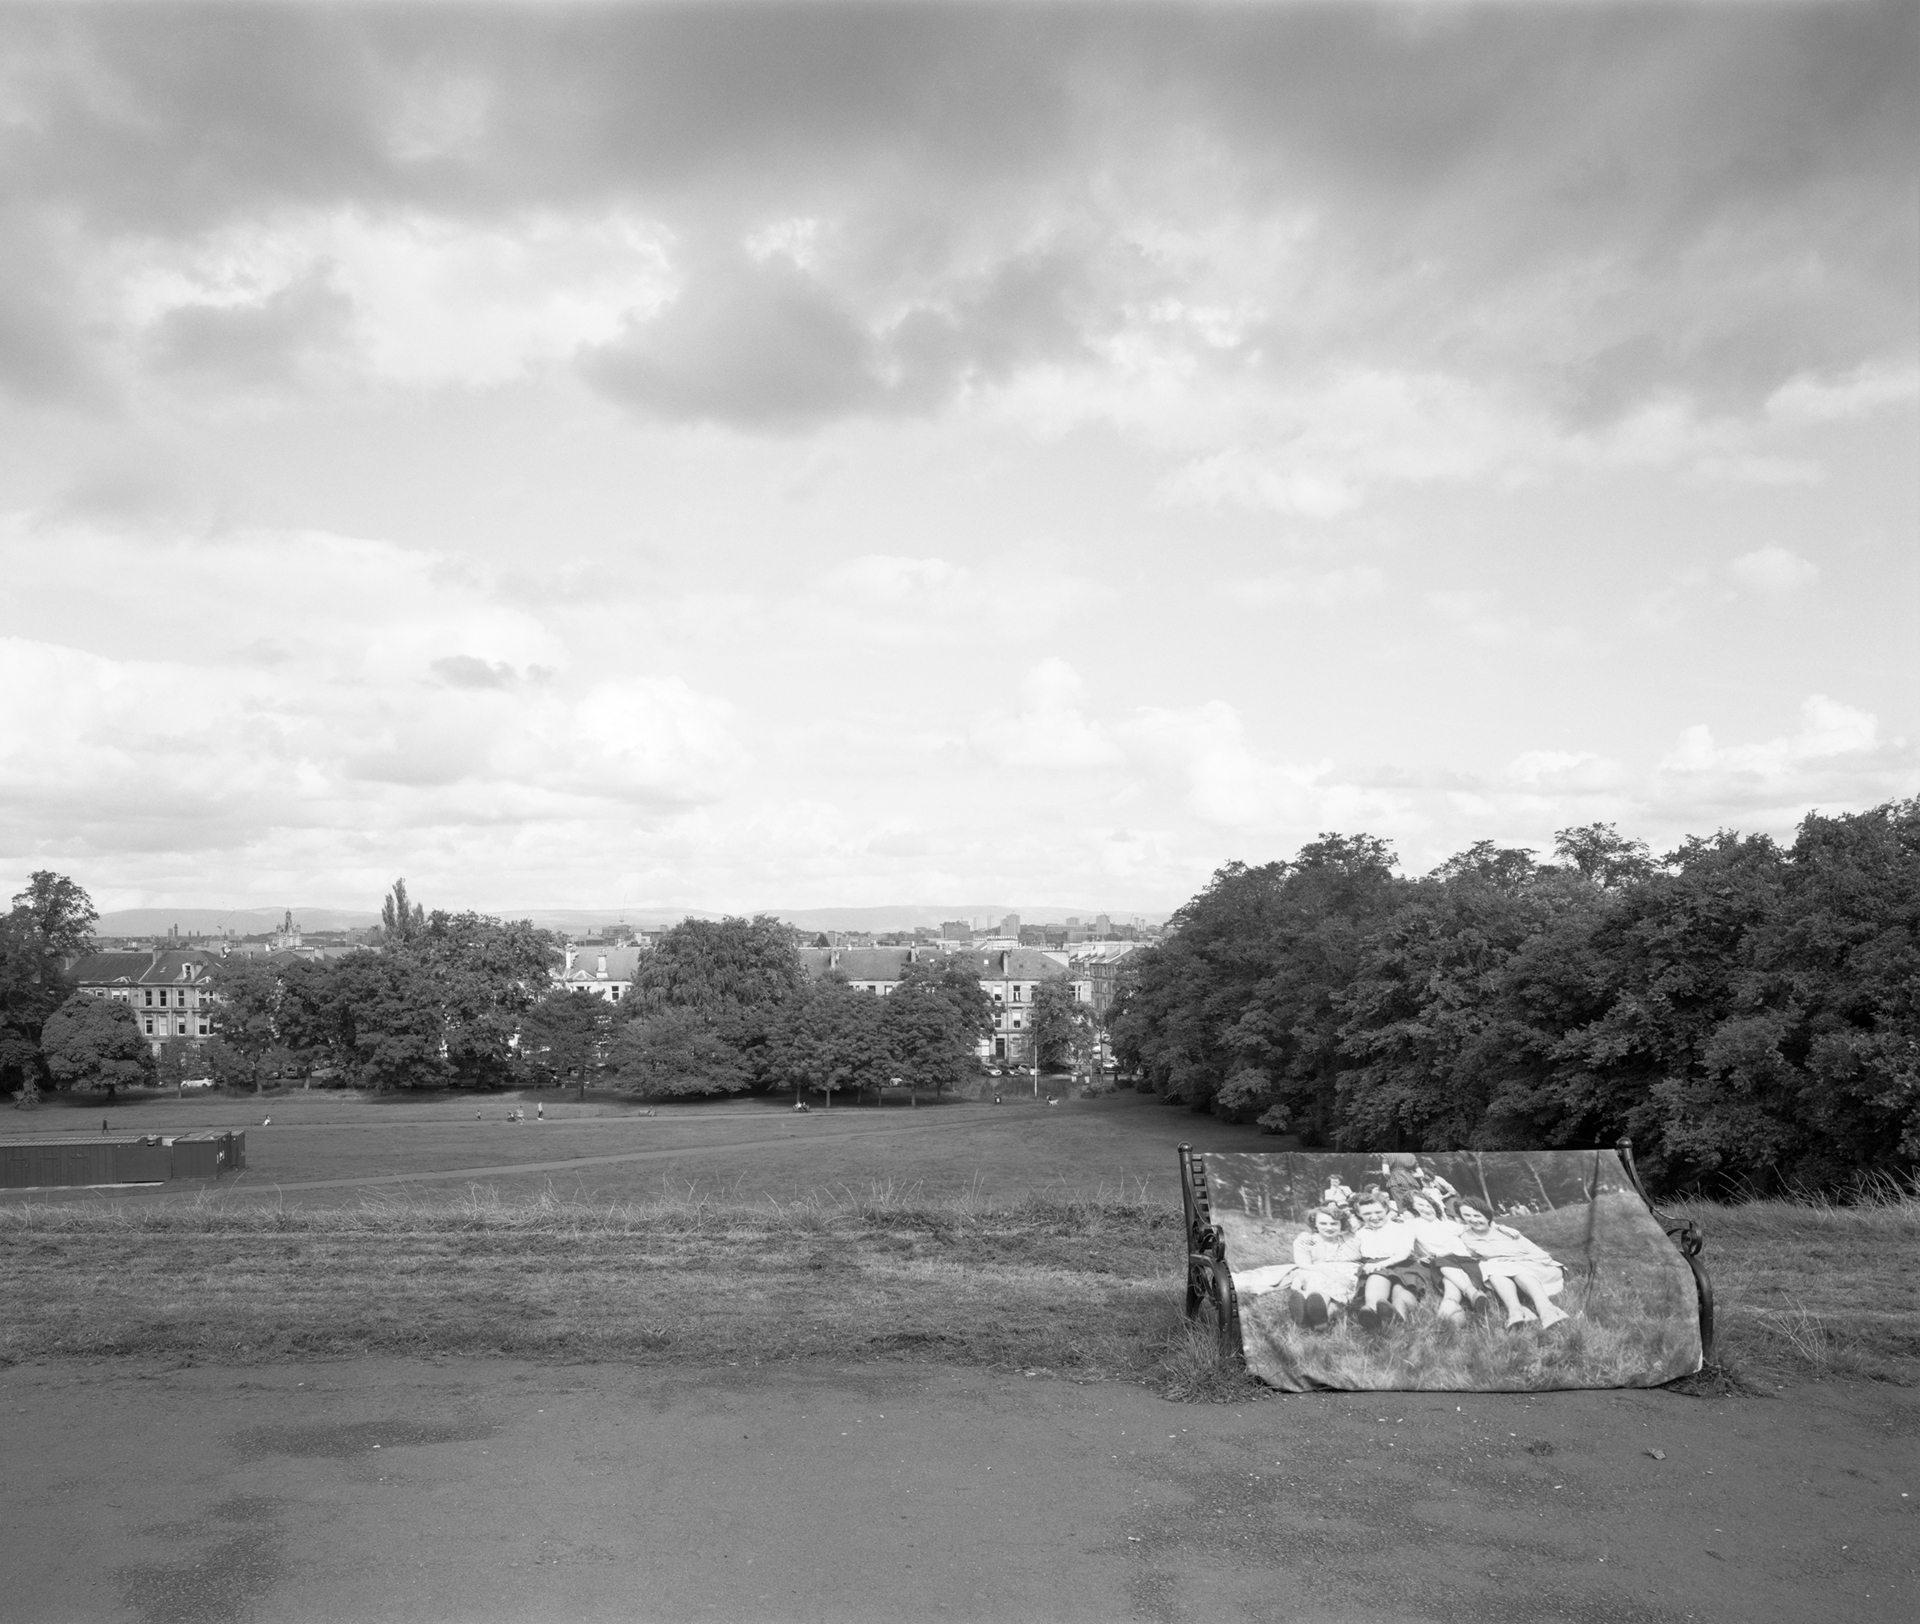 Migration Memories - Donegal Hill, Queens Park, Glasgow (2010)